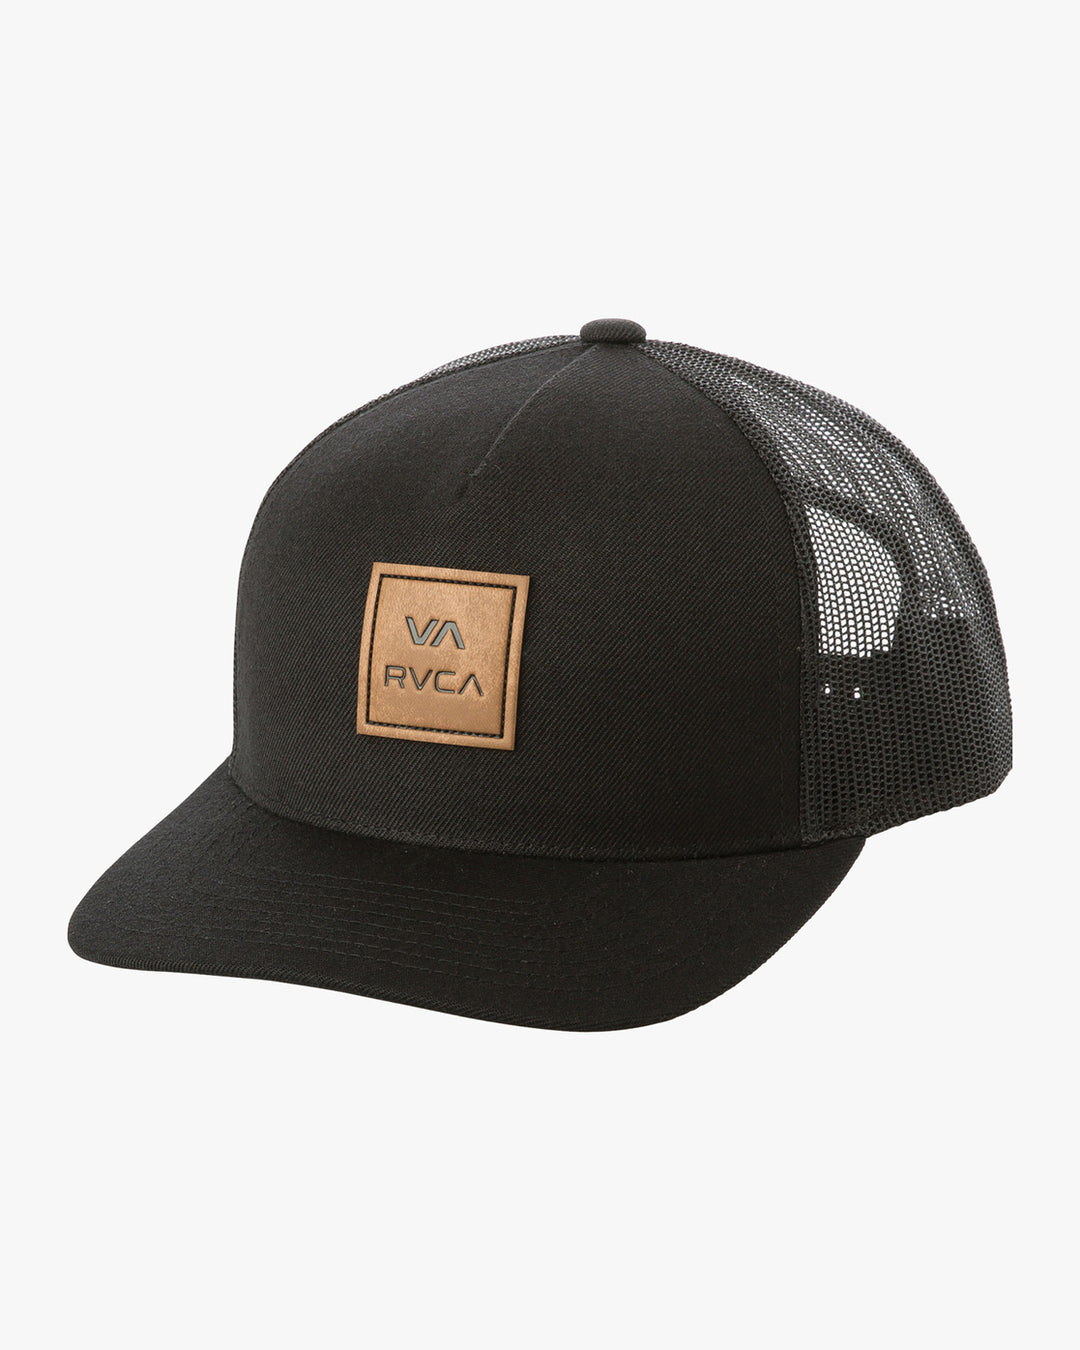 RVCA Boy's VA All The Way Curved Trucker Hat - Black - Sun Diego Boardshop